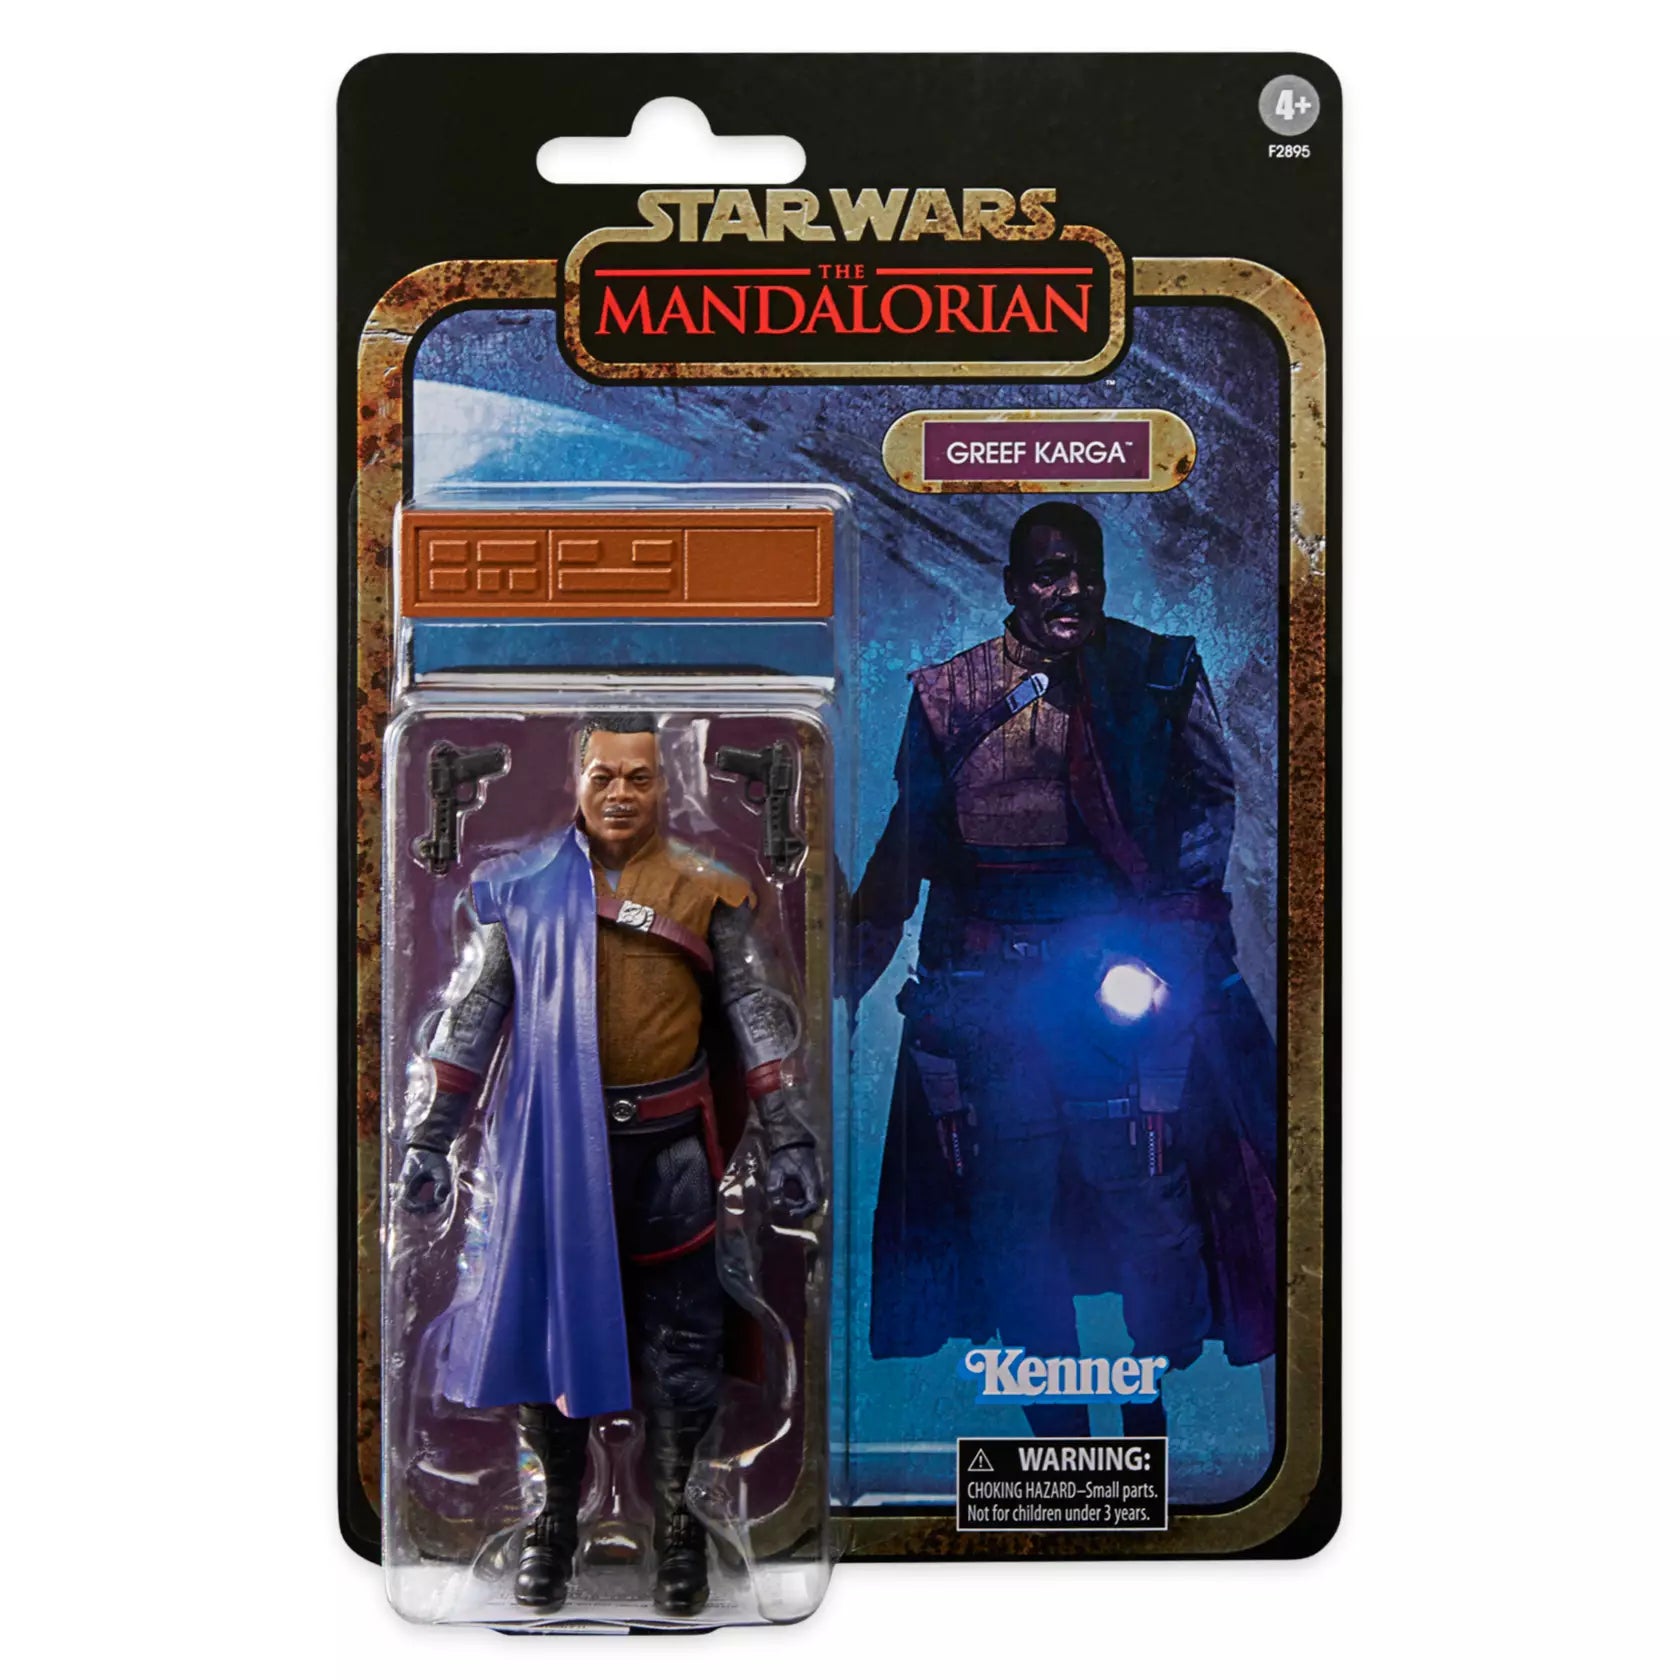 Star Wars: The Mandalorian – The Black Series Greef Karga By Hasbro